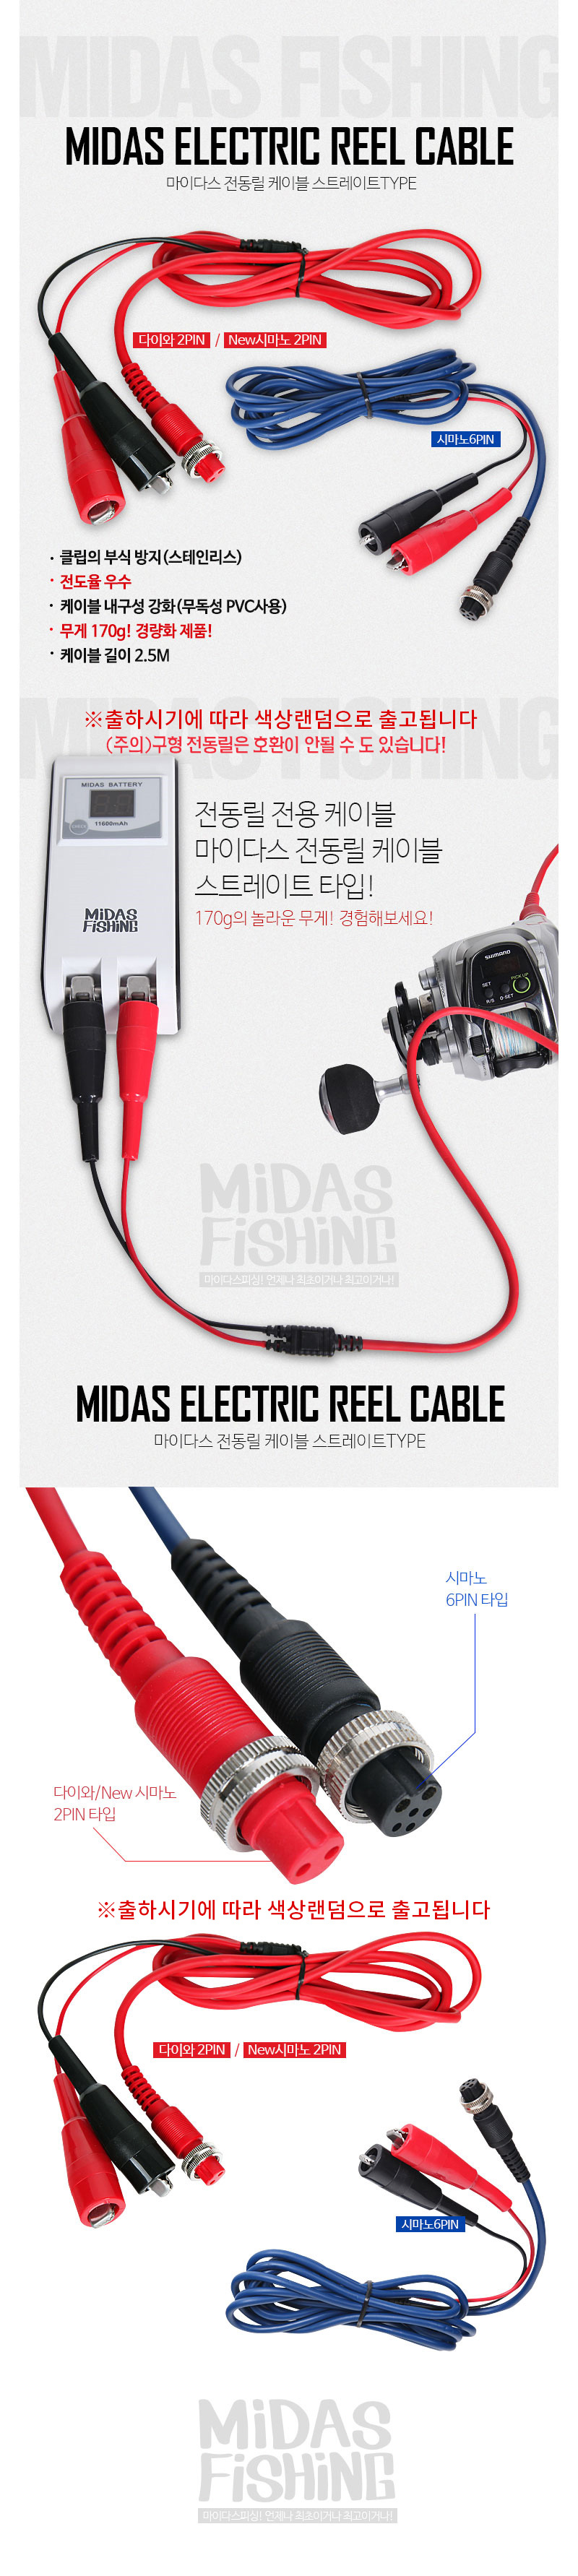 midas_ree-cable-straight_1.jpg